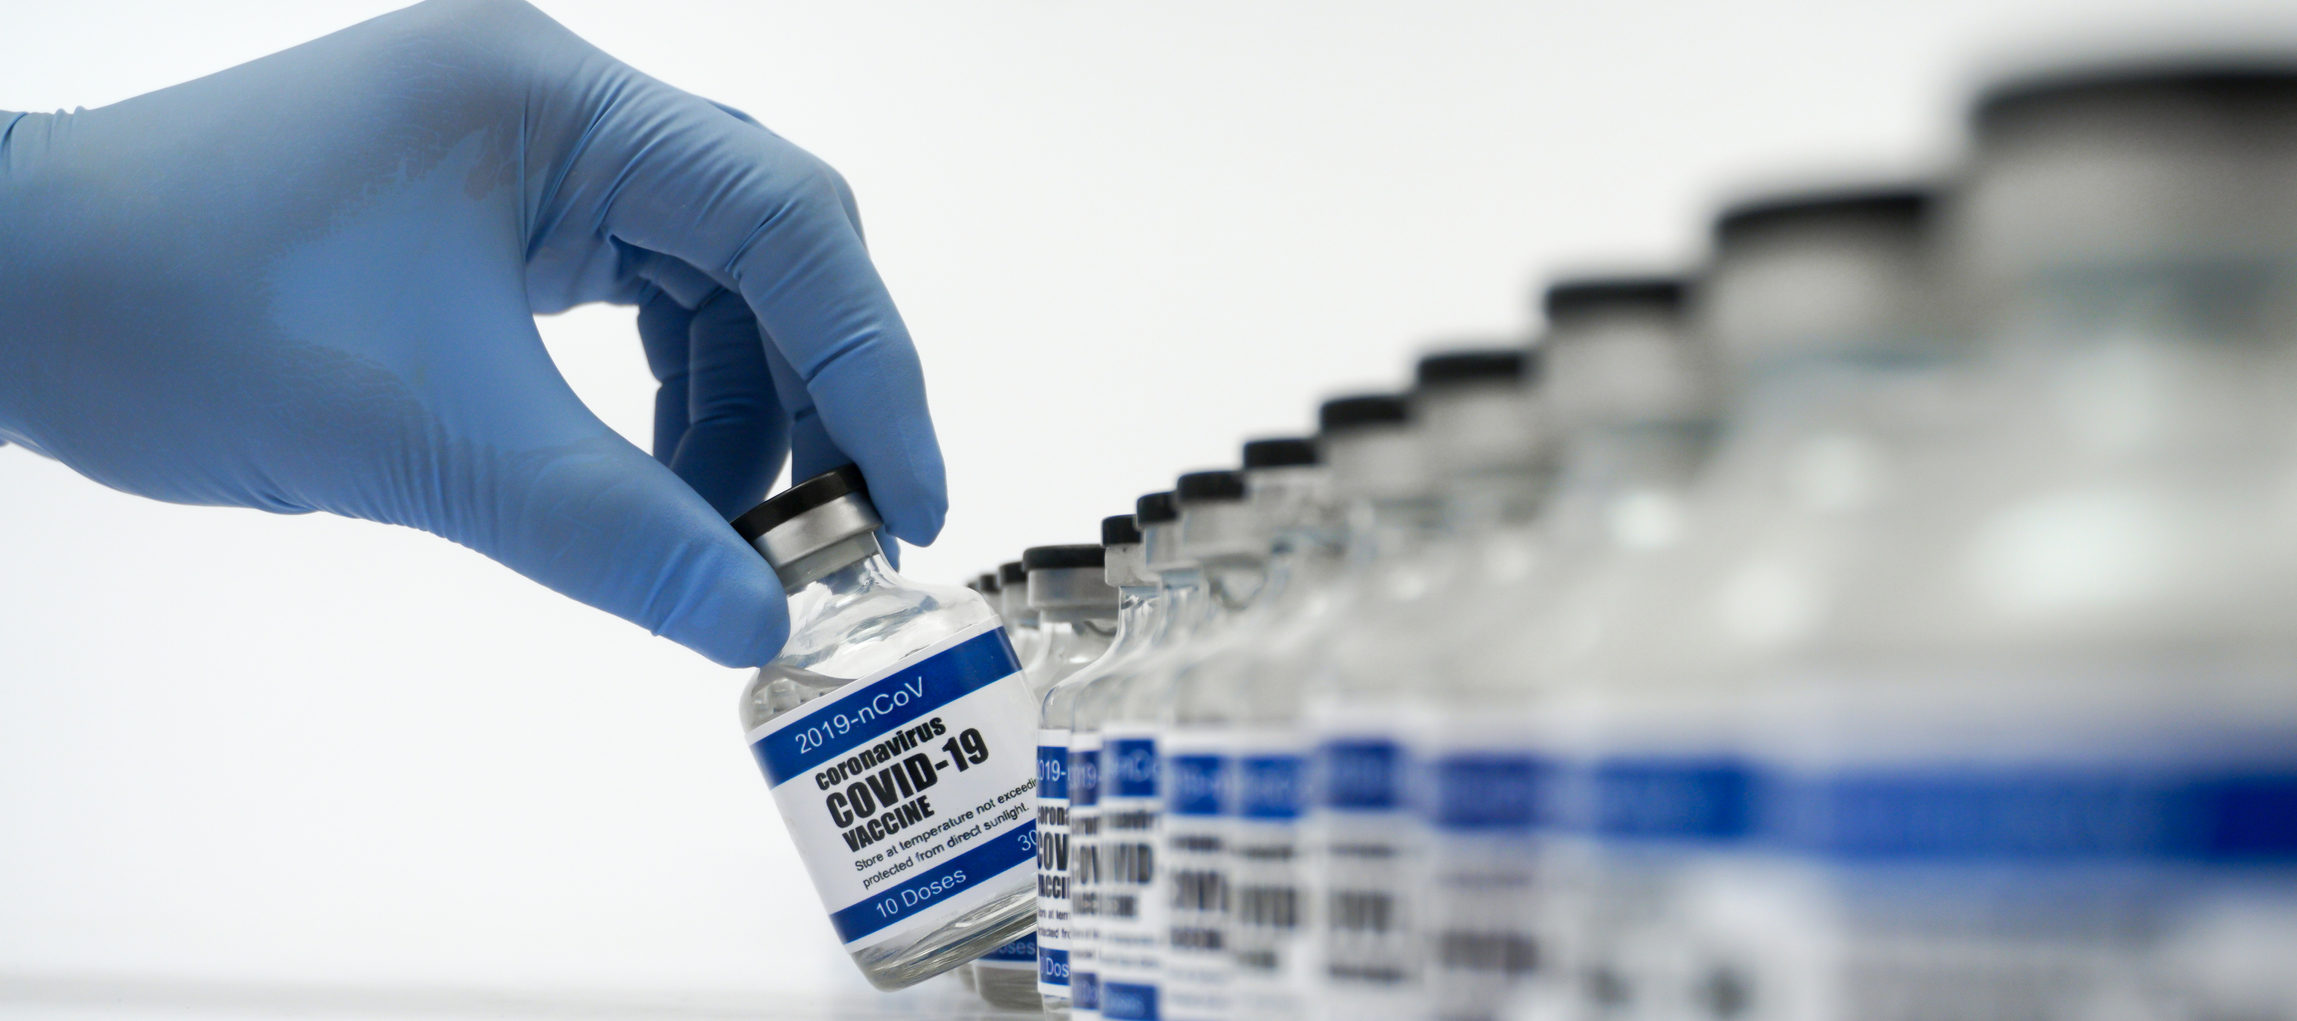 Vaccine vials with "coronavirus COVID-19 Vaccine" text on label